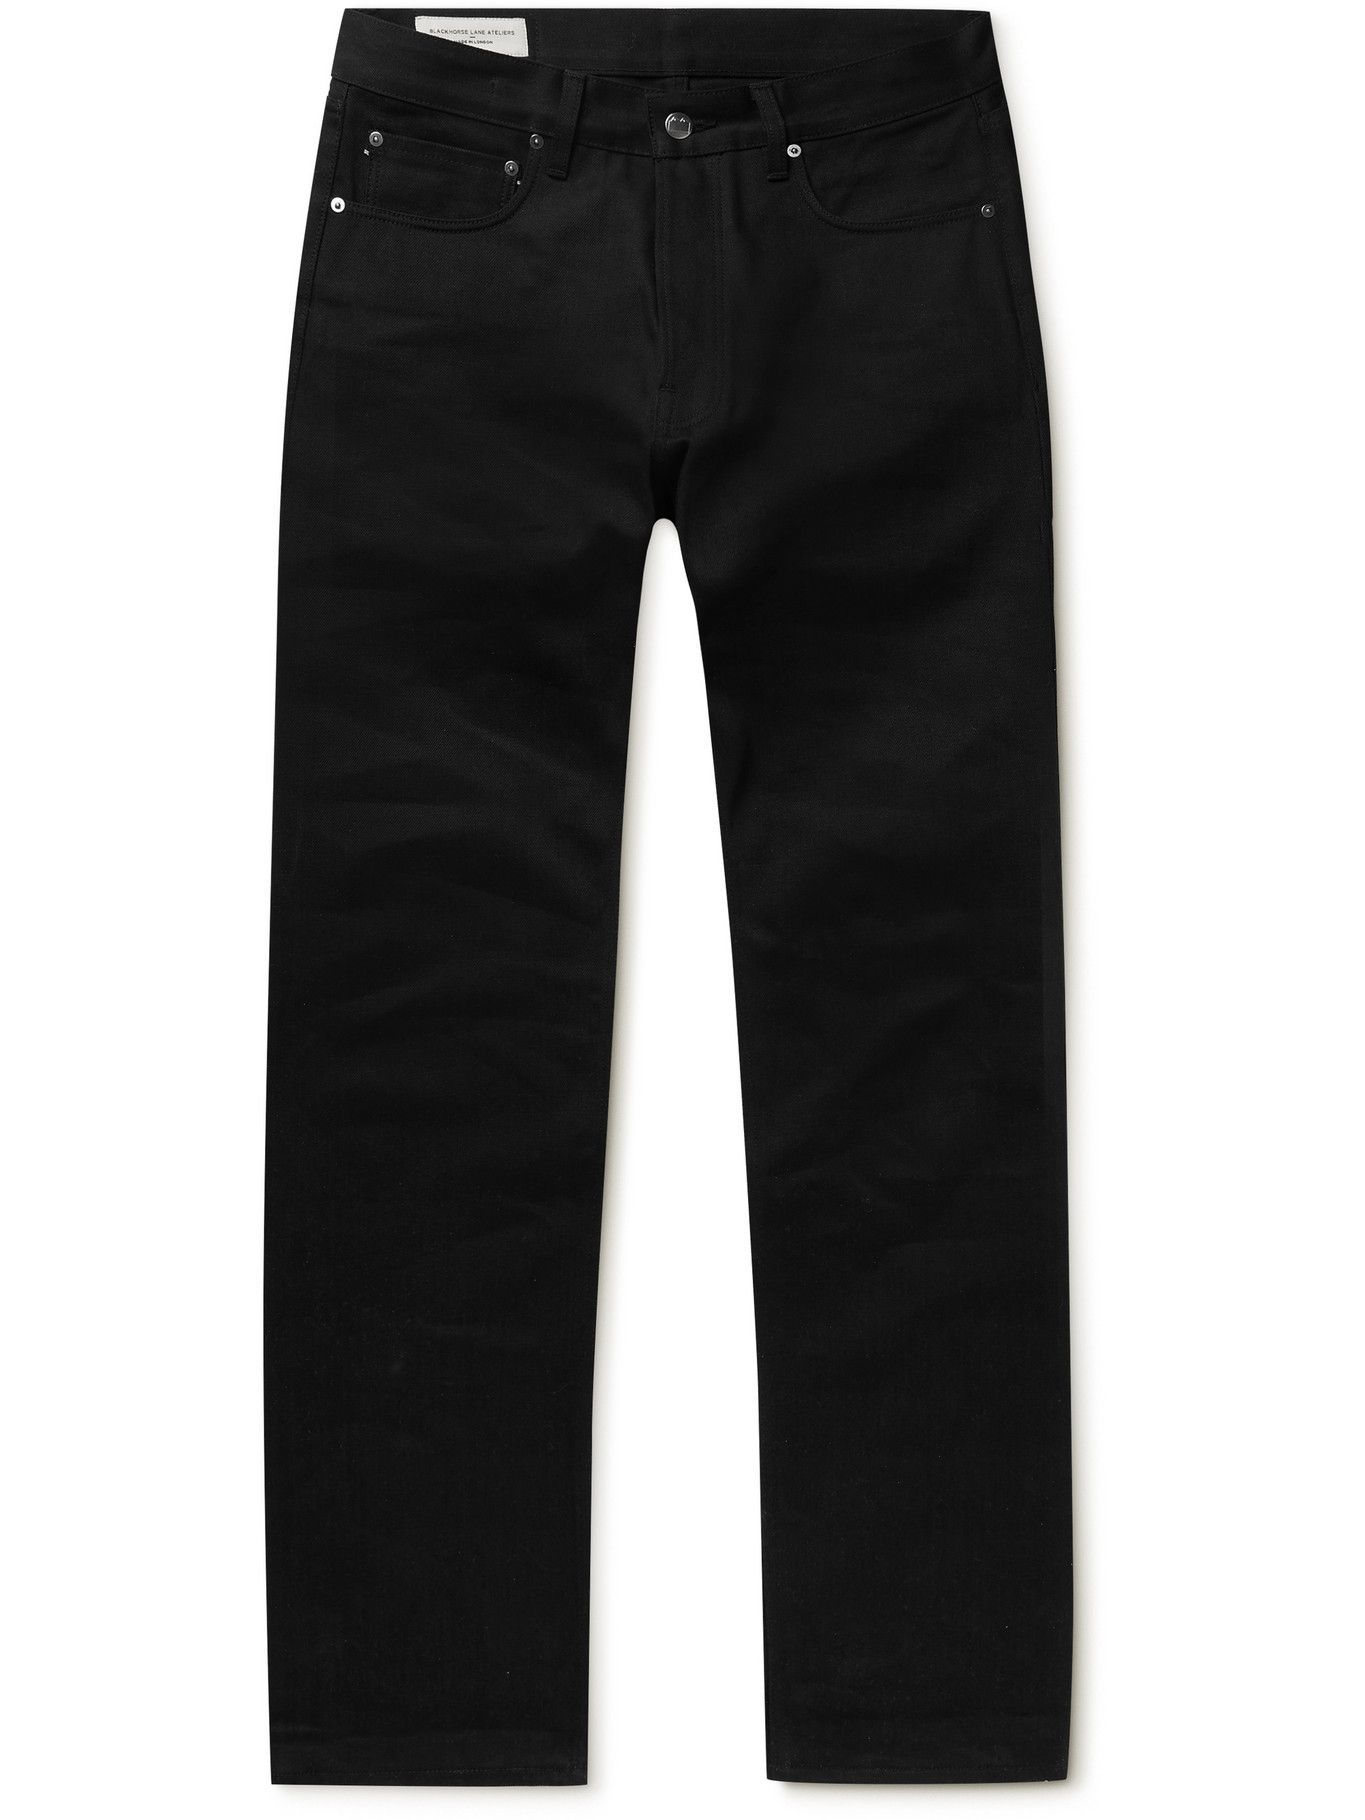 Blackhorse Lane Ateliers - NW1 Selvedge Jeans - Black